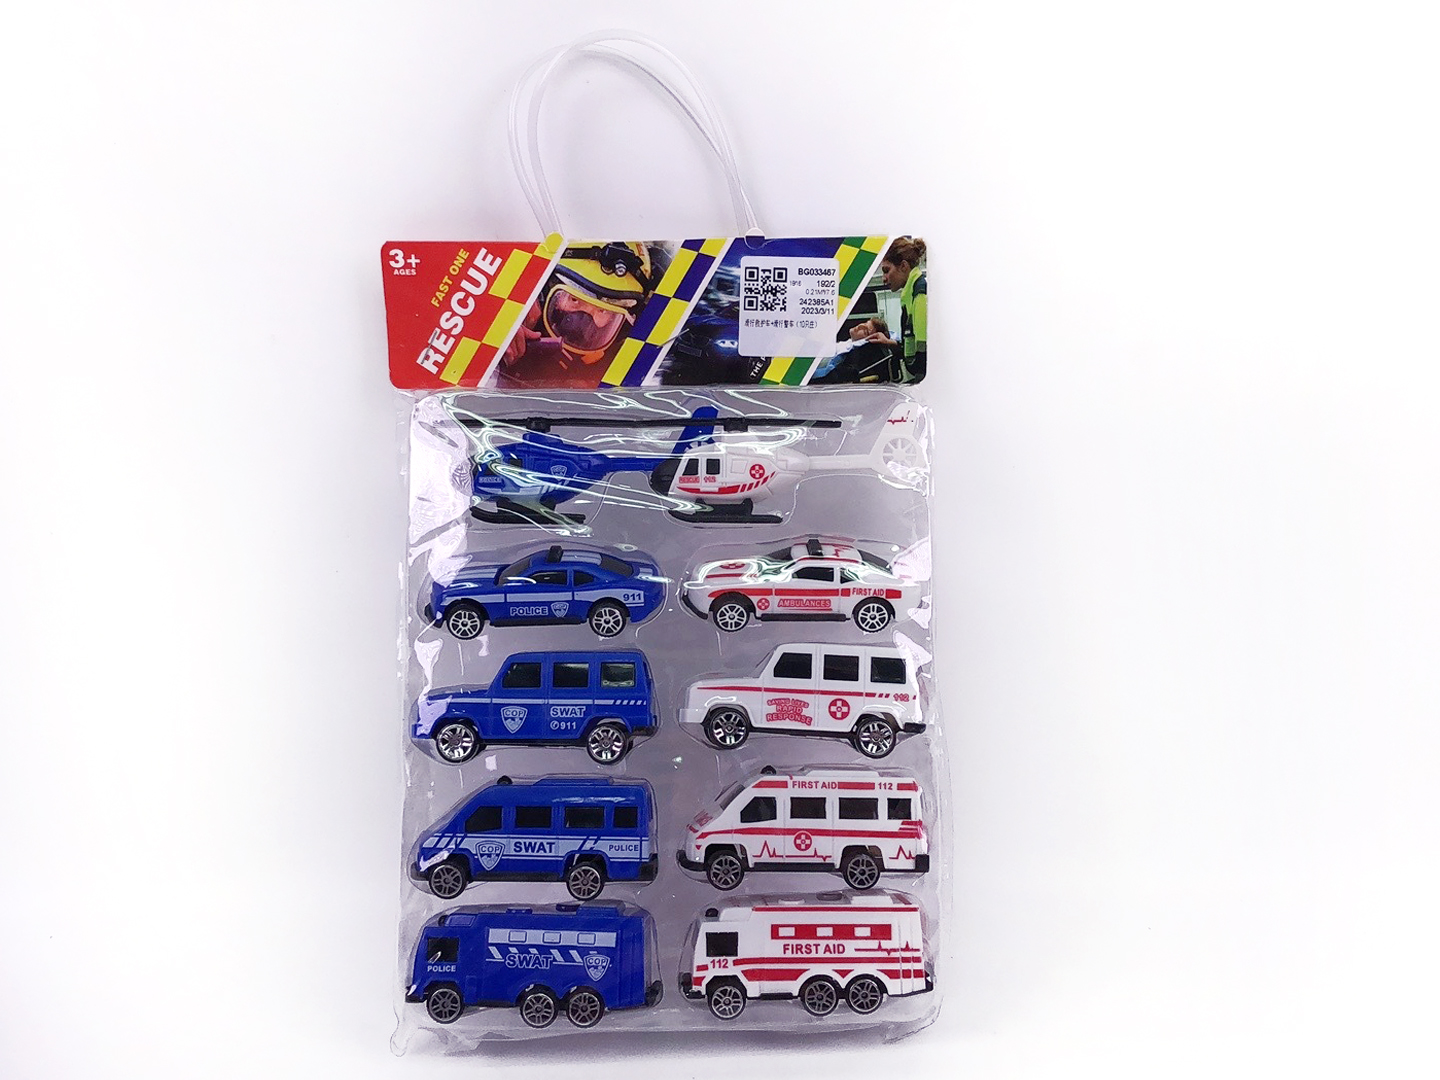 Free Wheel Ambulance & Free Wheel Police Car(10in1) toys